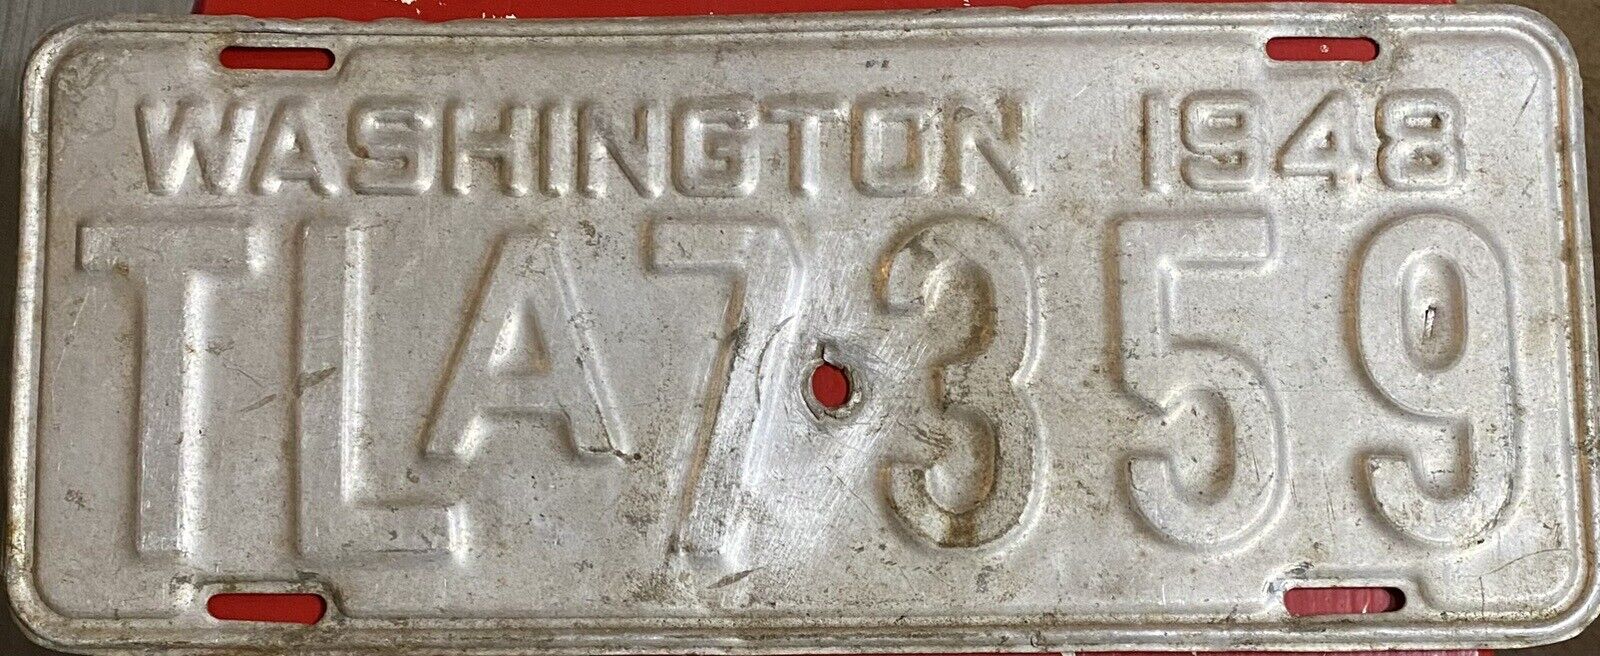 1948 King County Washington State Trailer License Plate TLA 7359 Wa Wash Wn